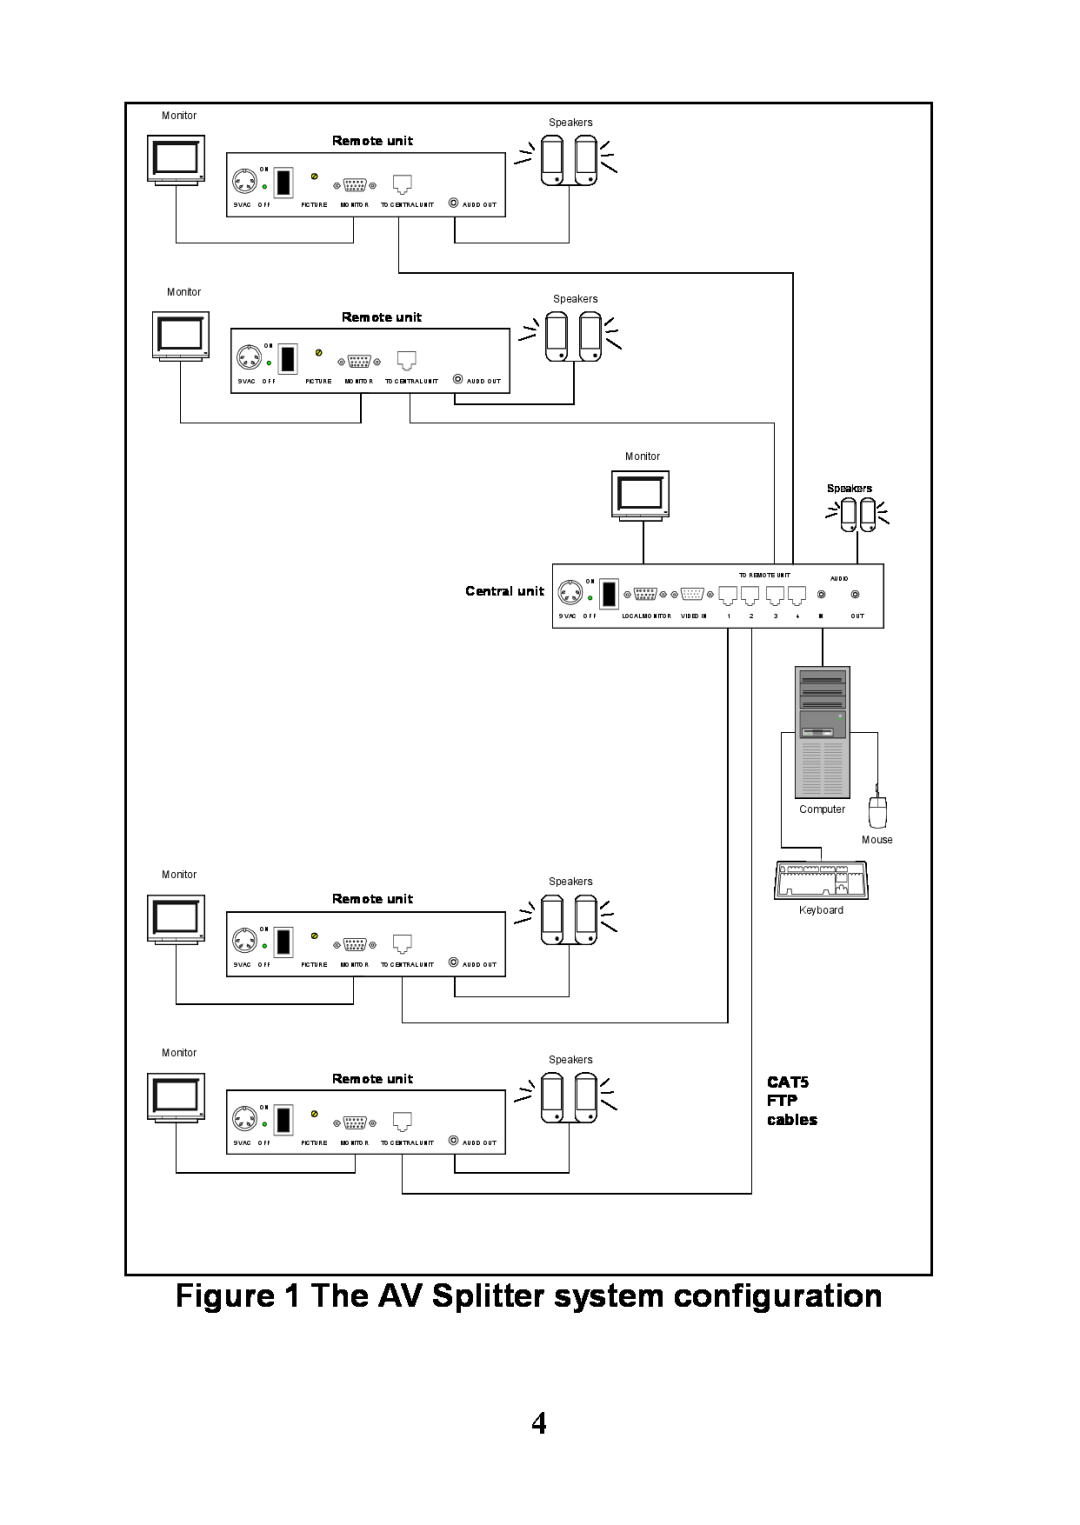 Minicom Advanced Systems 5UM40066 - V1 8/01 The AV Splitter system configuration, CAT5, cables, Remote unit, Central unit 